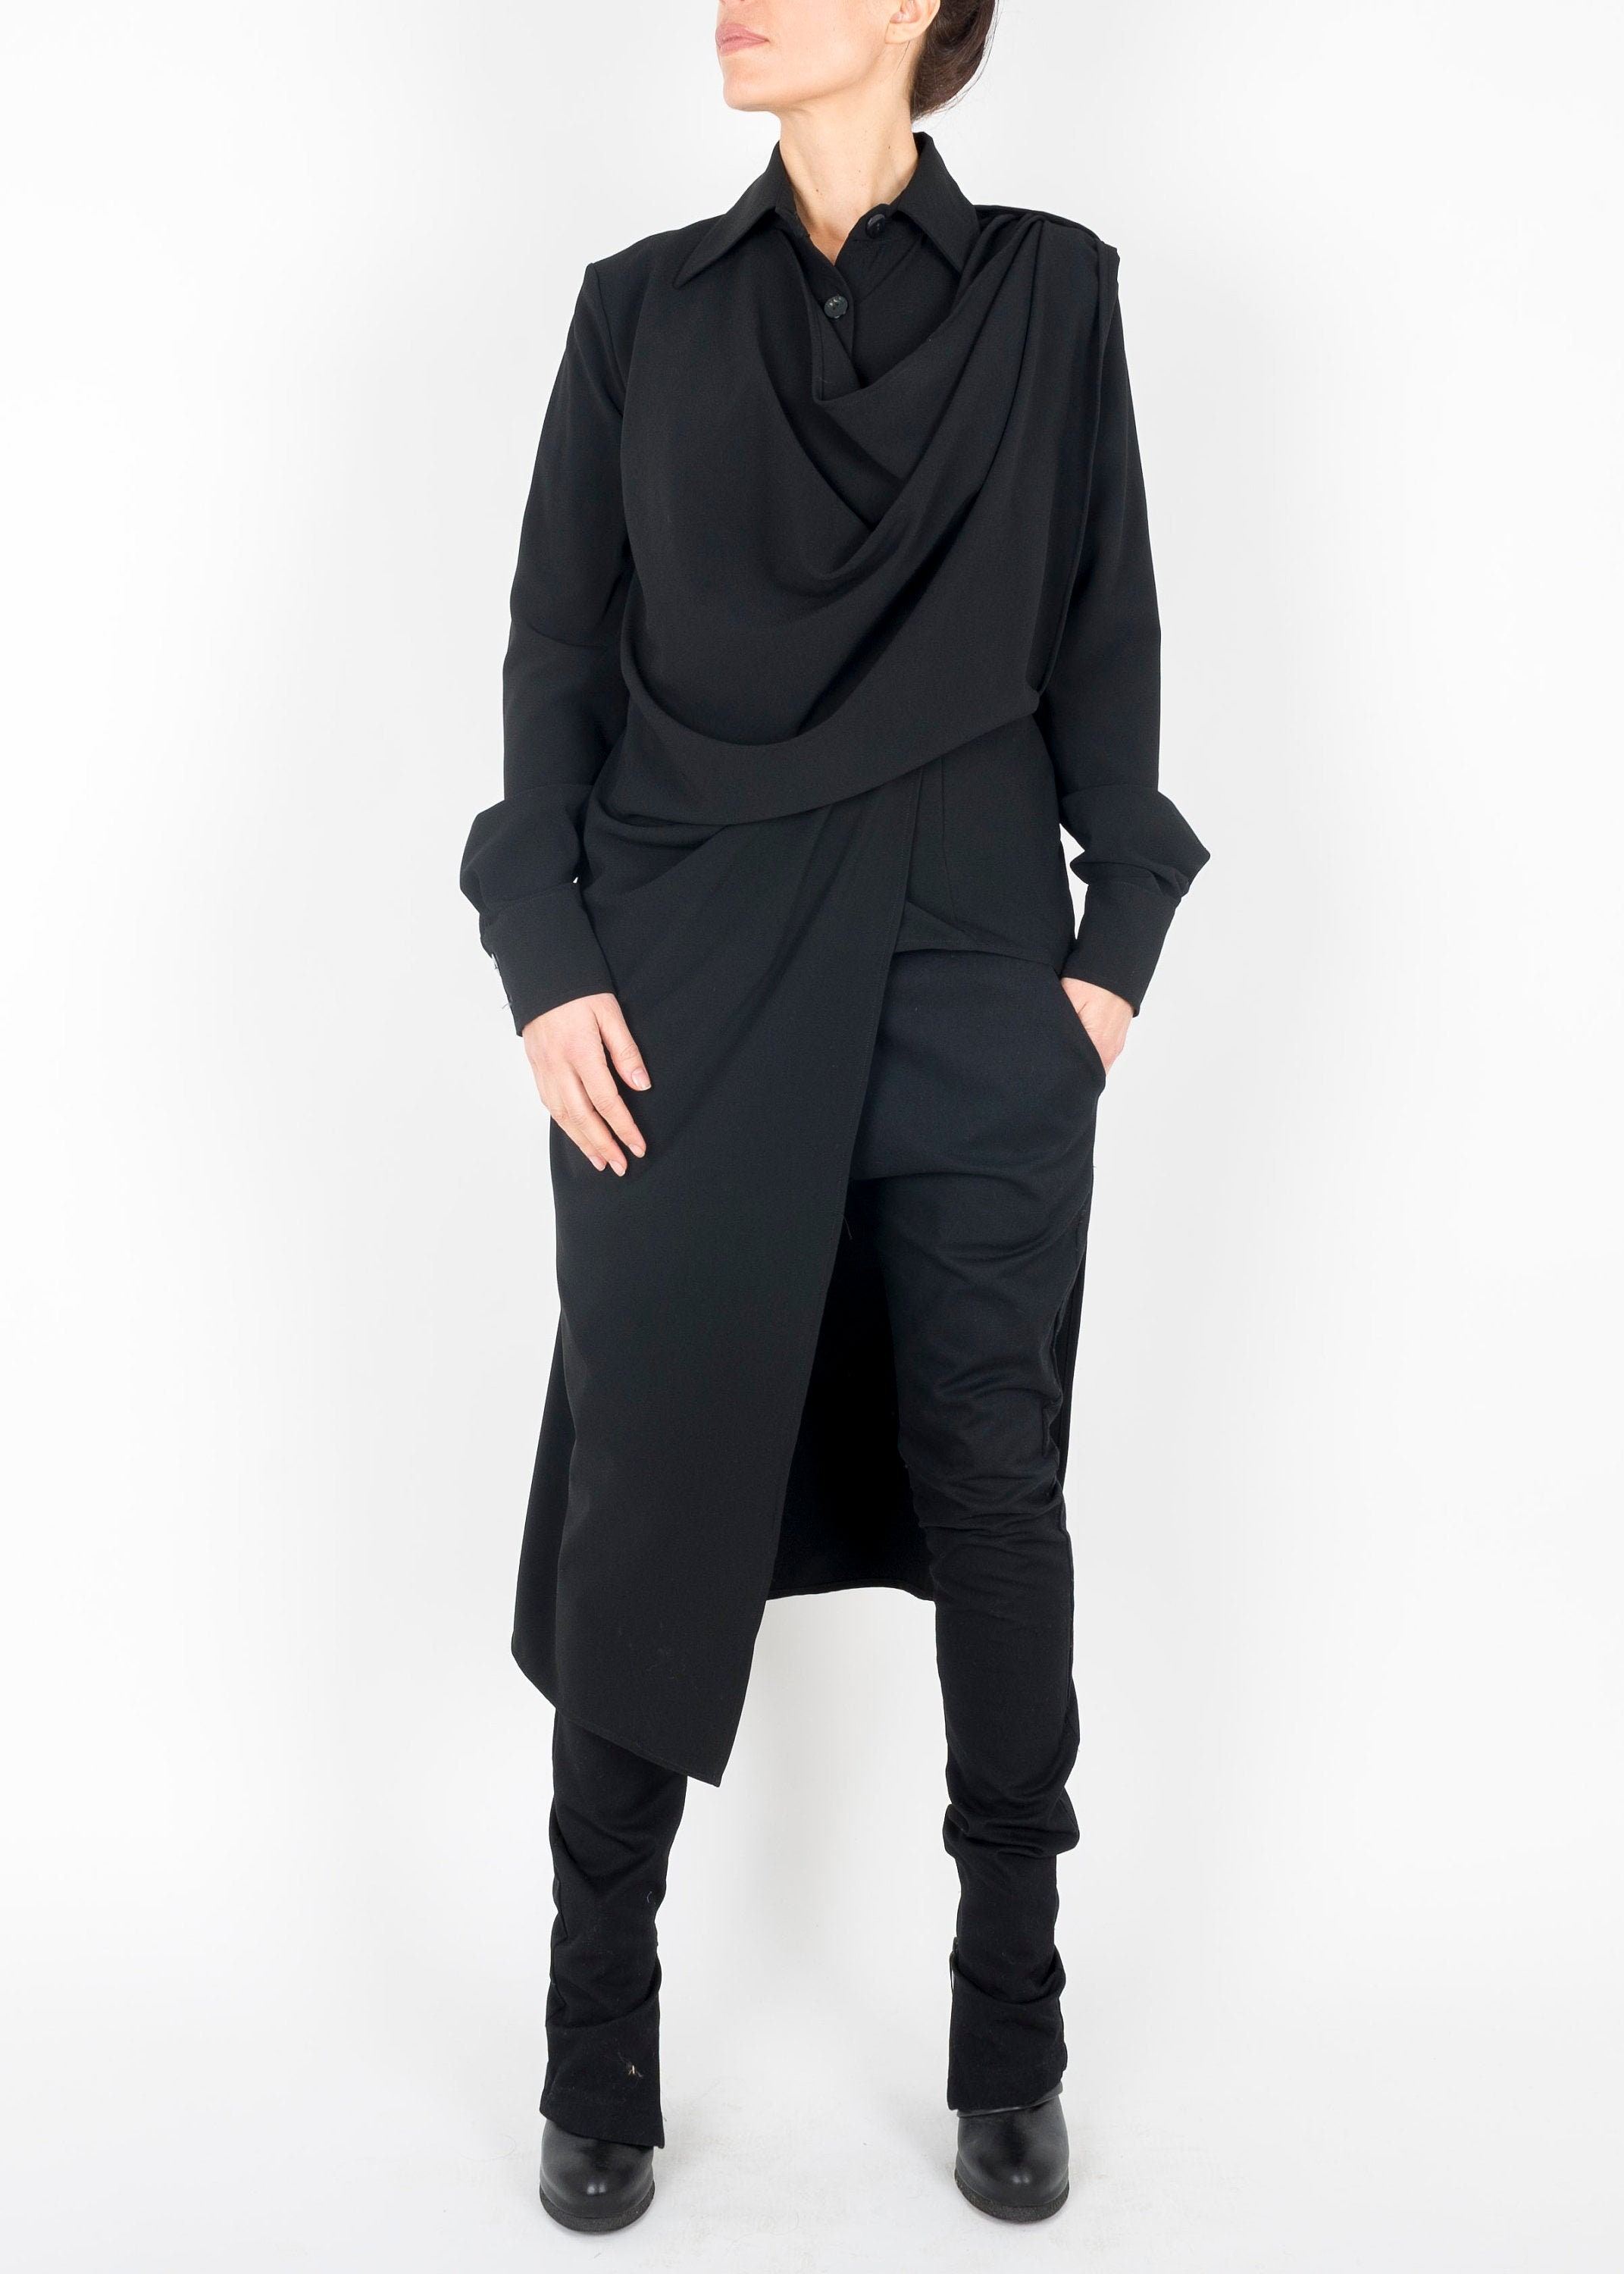 Asymmetric Black Shirt Designer Blouse Long Shirt Fashion - Etsy